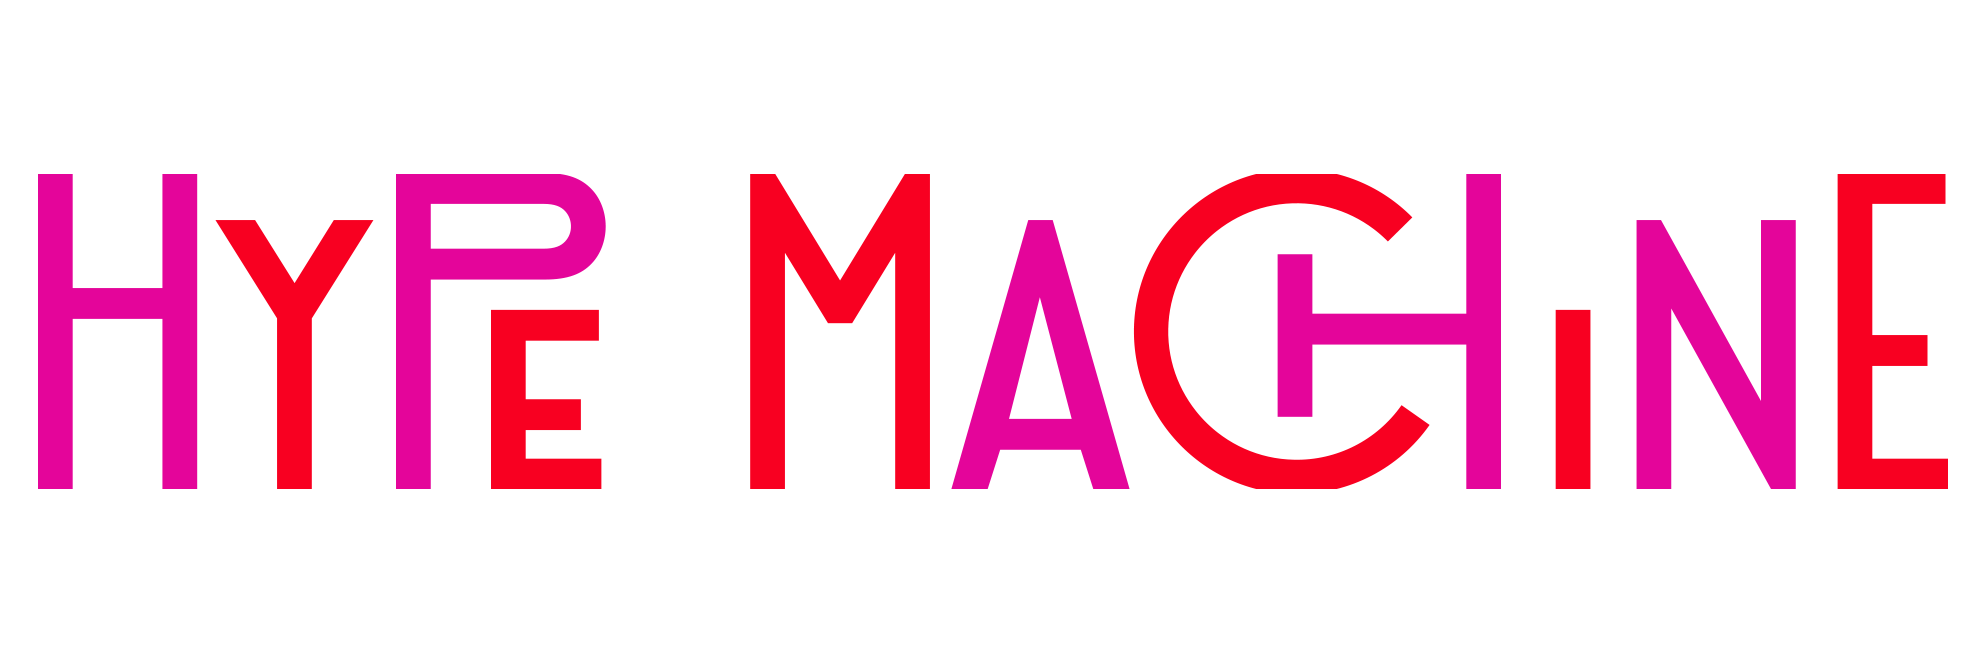 Hype machine logo